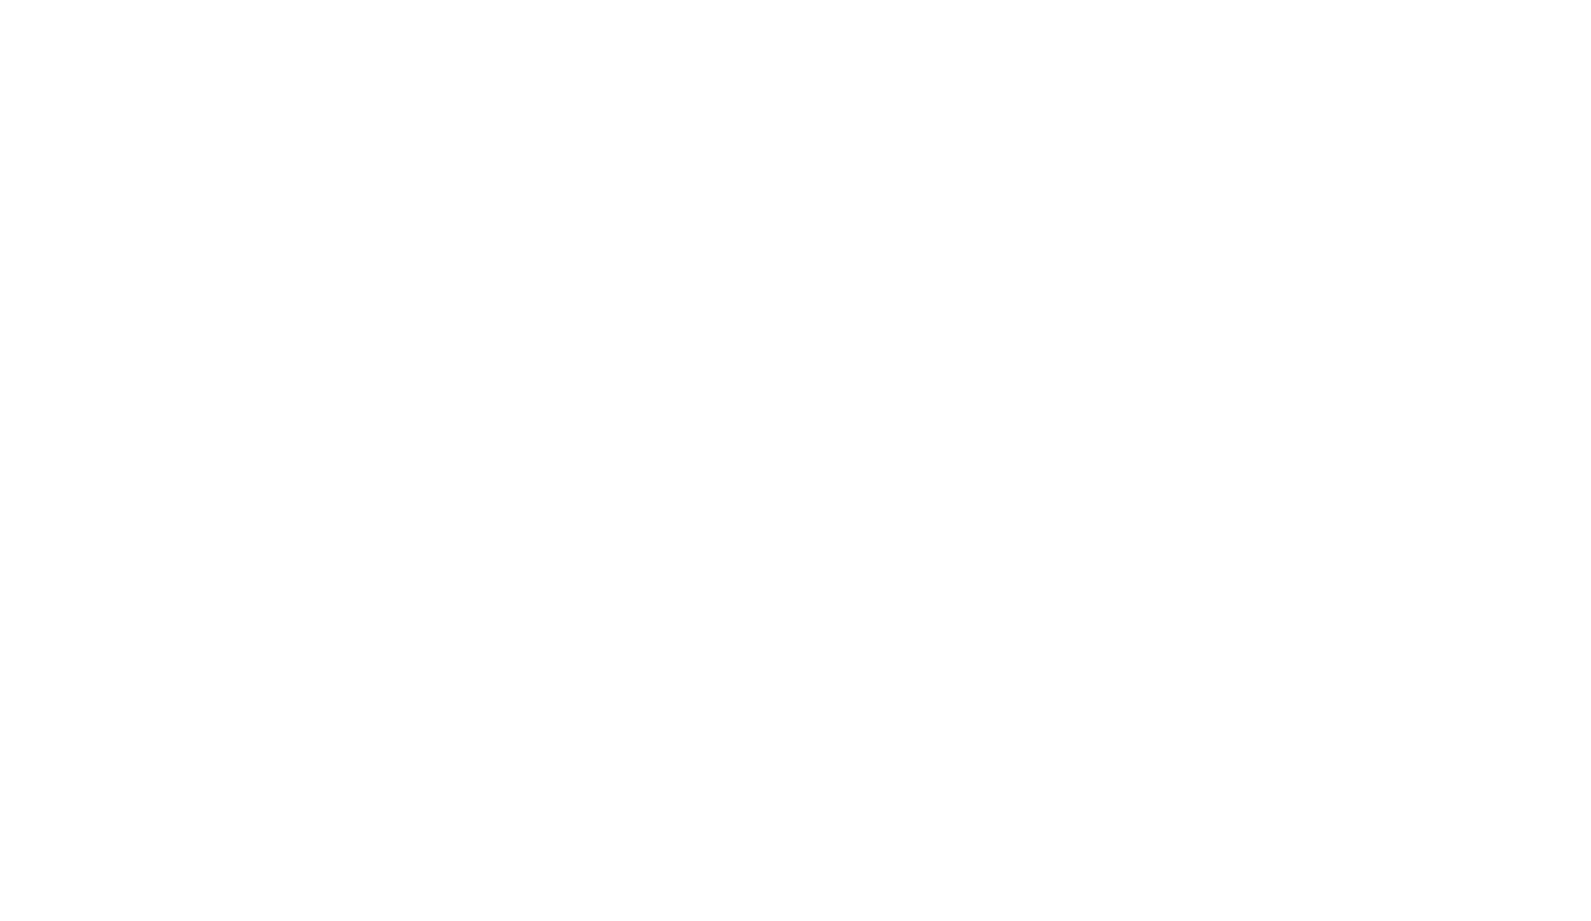 Hess Midstream logo for dark backgrounds (transparent PNG)